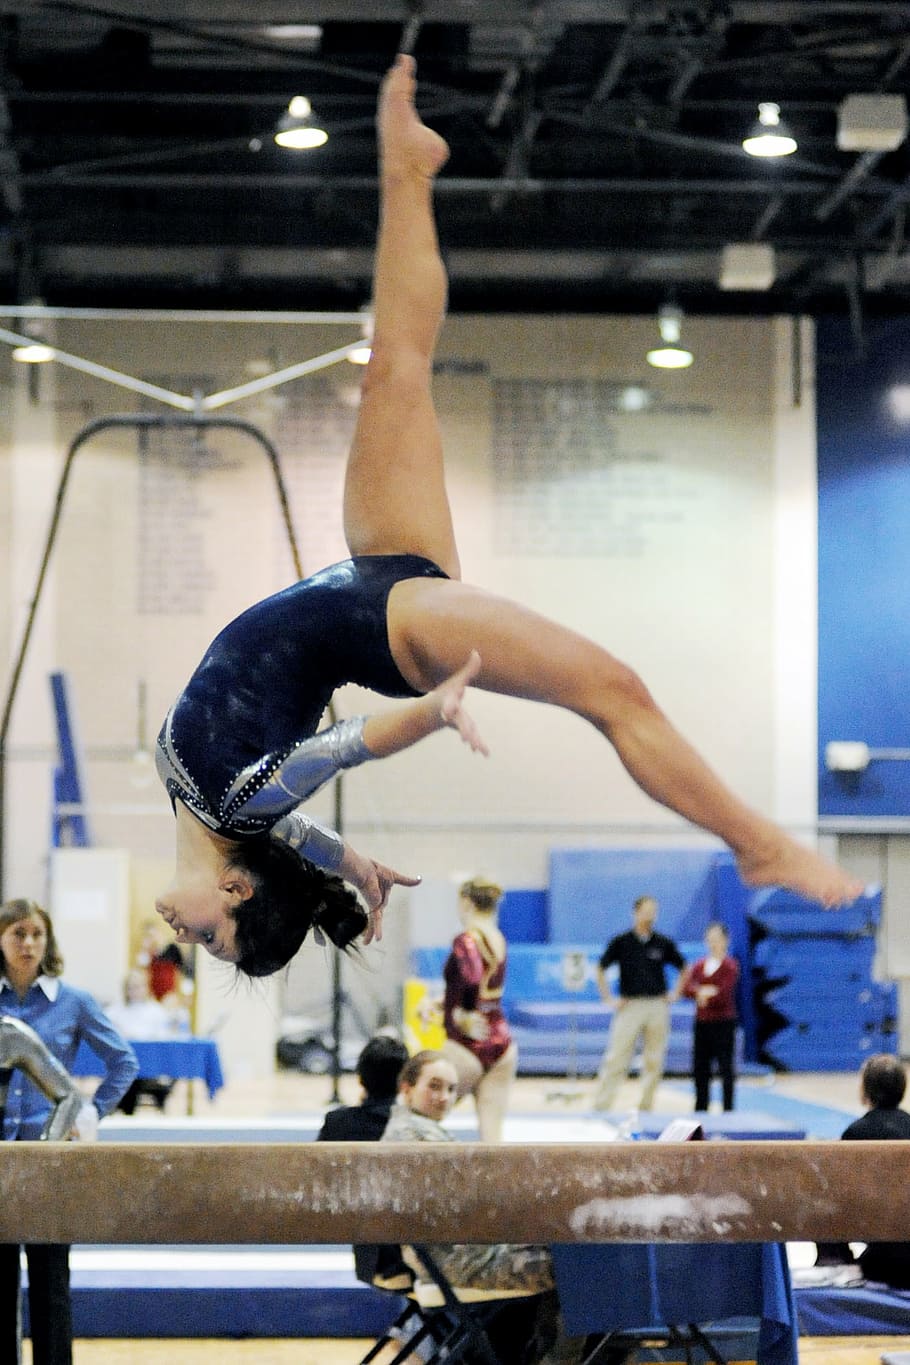 gymnastics-female-performance-balance.jpg